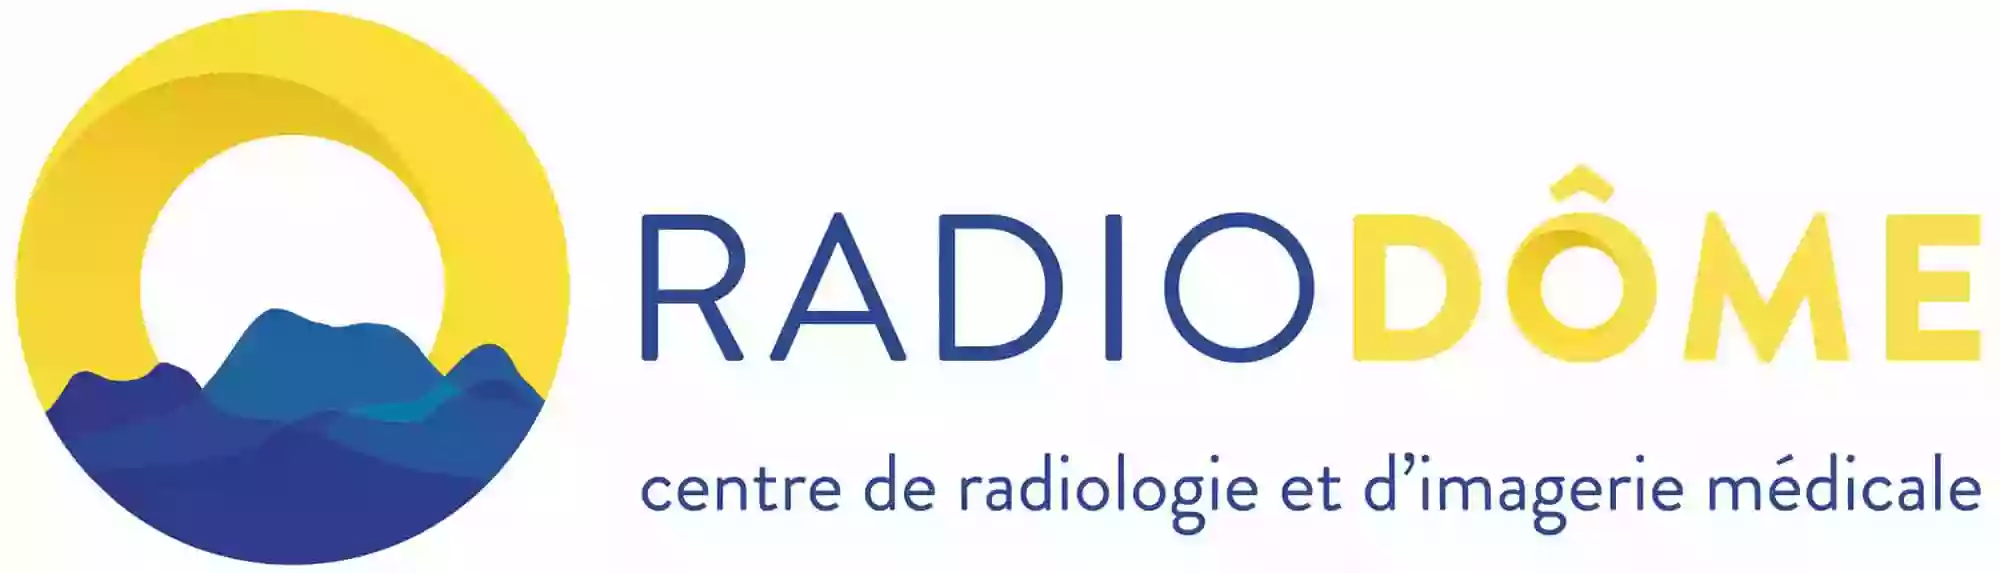 Cabinet de Radiologie RADIODOME - Dr Julien MERCIER - radio dome - issoire